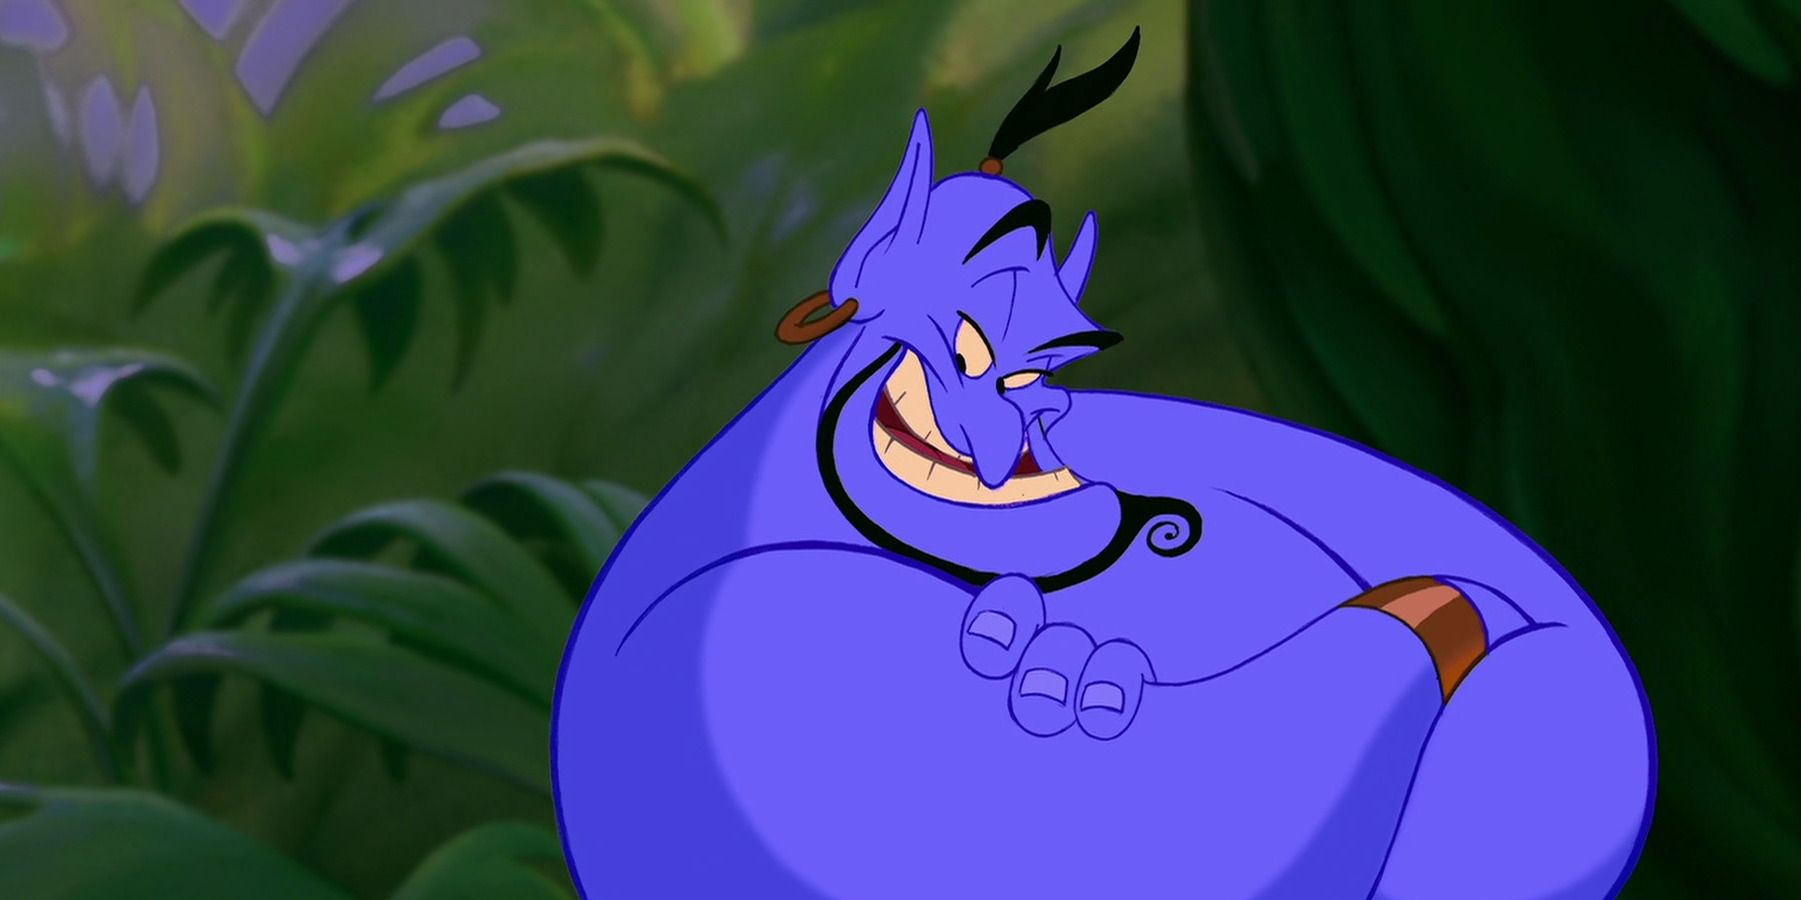 Robin Williams as Genie